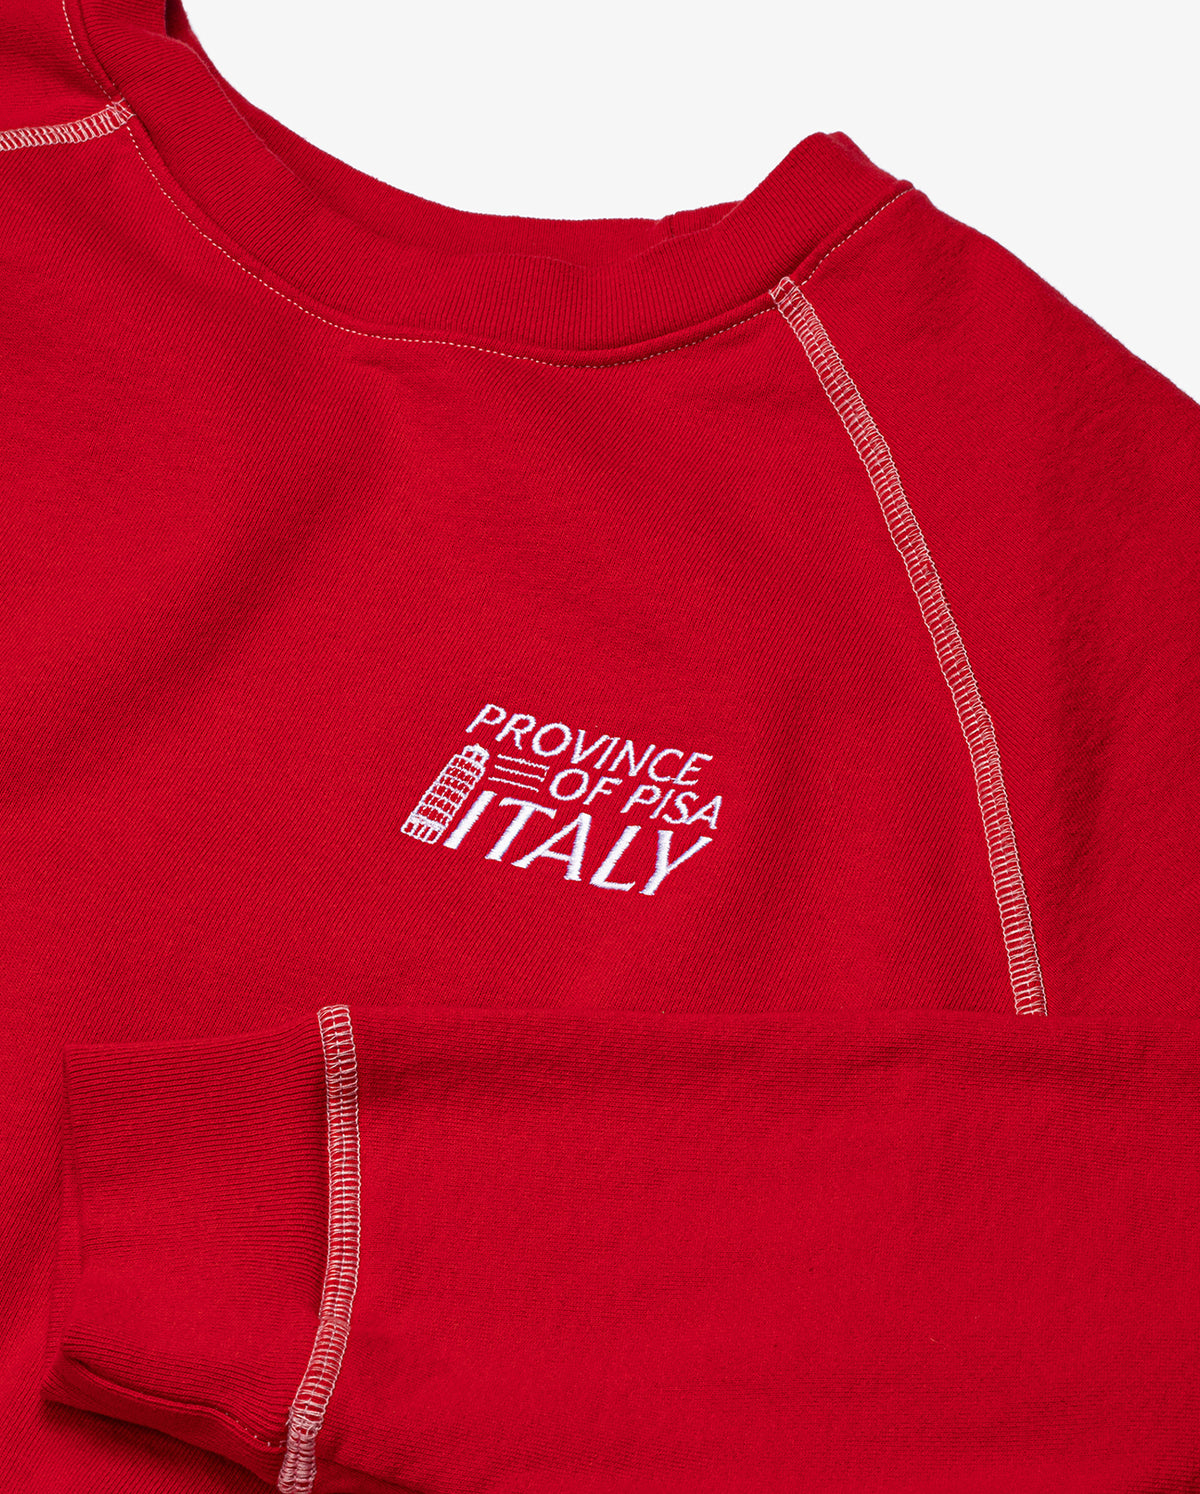 Leaning Tower Of Pisa Tourist Sweatshirt